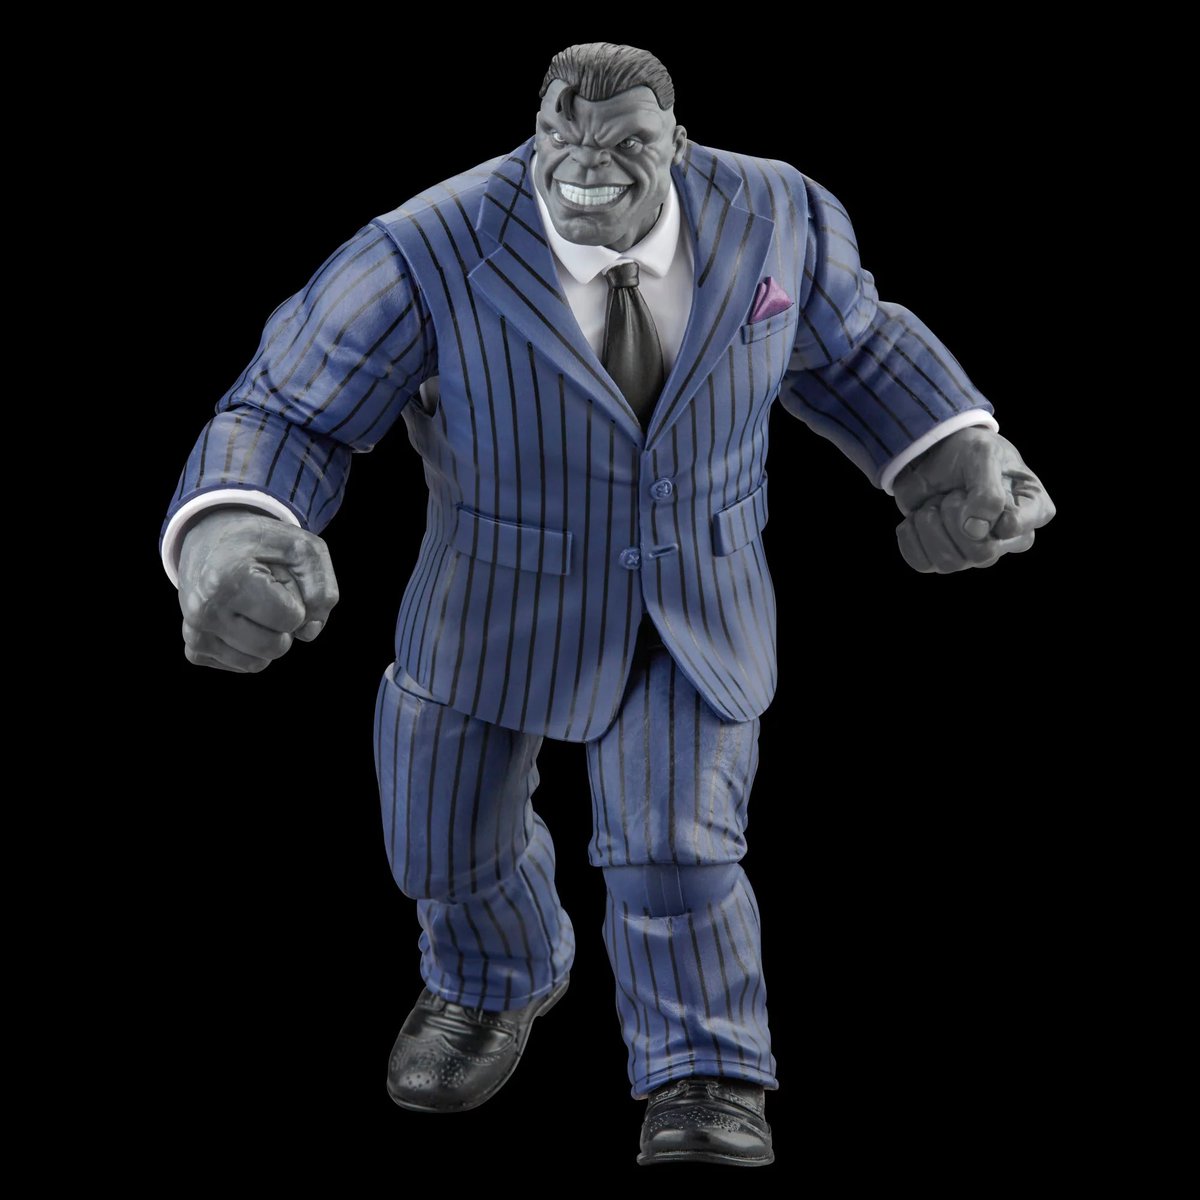 Marvel Legends Series The Incredible Hulk Joe Fixit Hasbro F6543

Link para compra BR: -Indisponível-

Buy here: amzn.to/3NftBE1

#marvel #marvellegends #hasbro #actionfigures #comics #hulk #theincrediablehulk #brucebanner #grayhulk #greyhulk #joefixit #hulkcinza